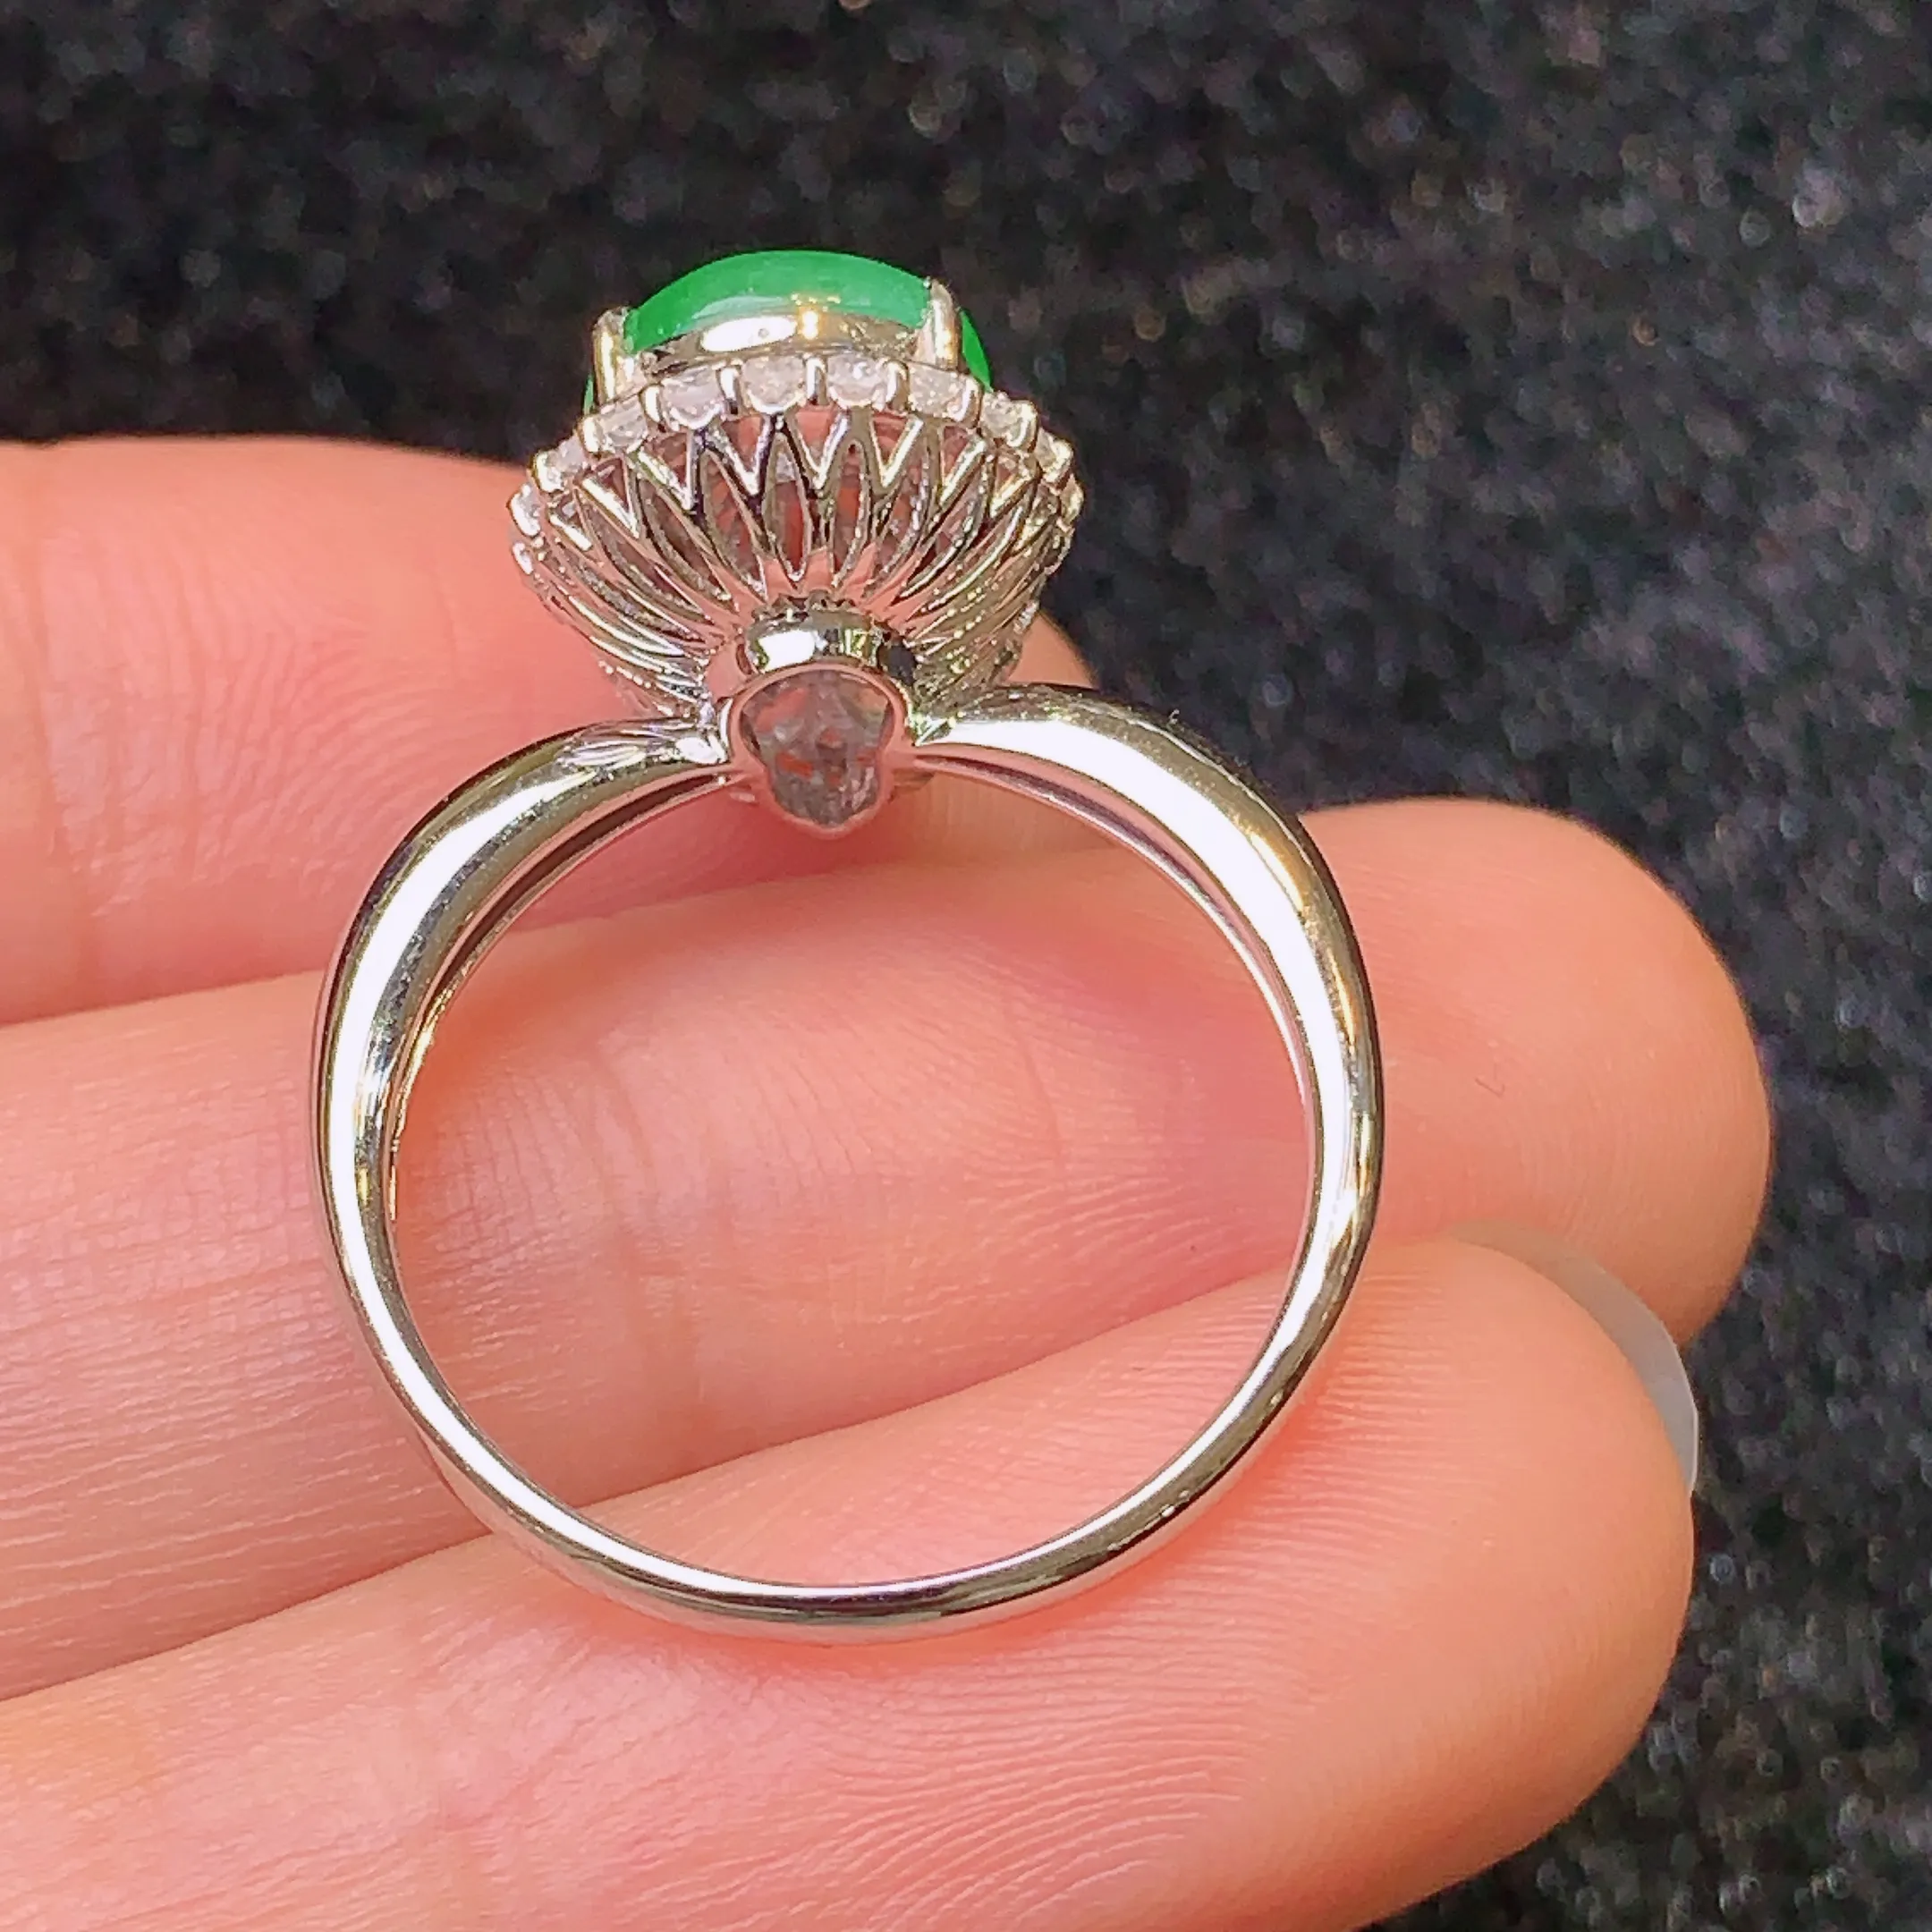 18k金钻镶嵌满绿葫芦戒指 玉质细腻 款式新颖时尚高贵优雅 圈口14整体尺寸15.6*11*9.1